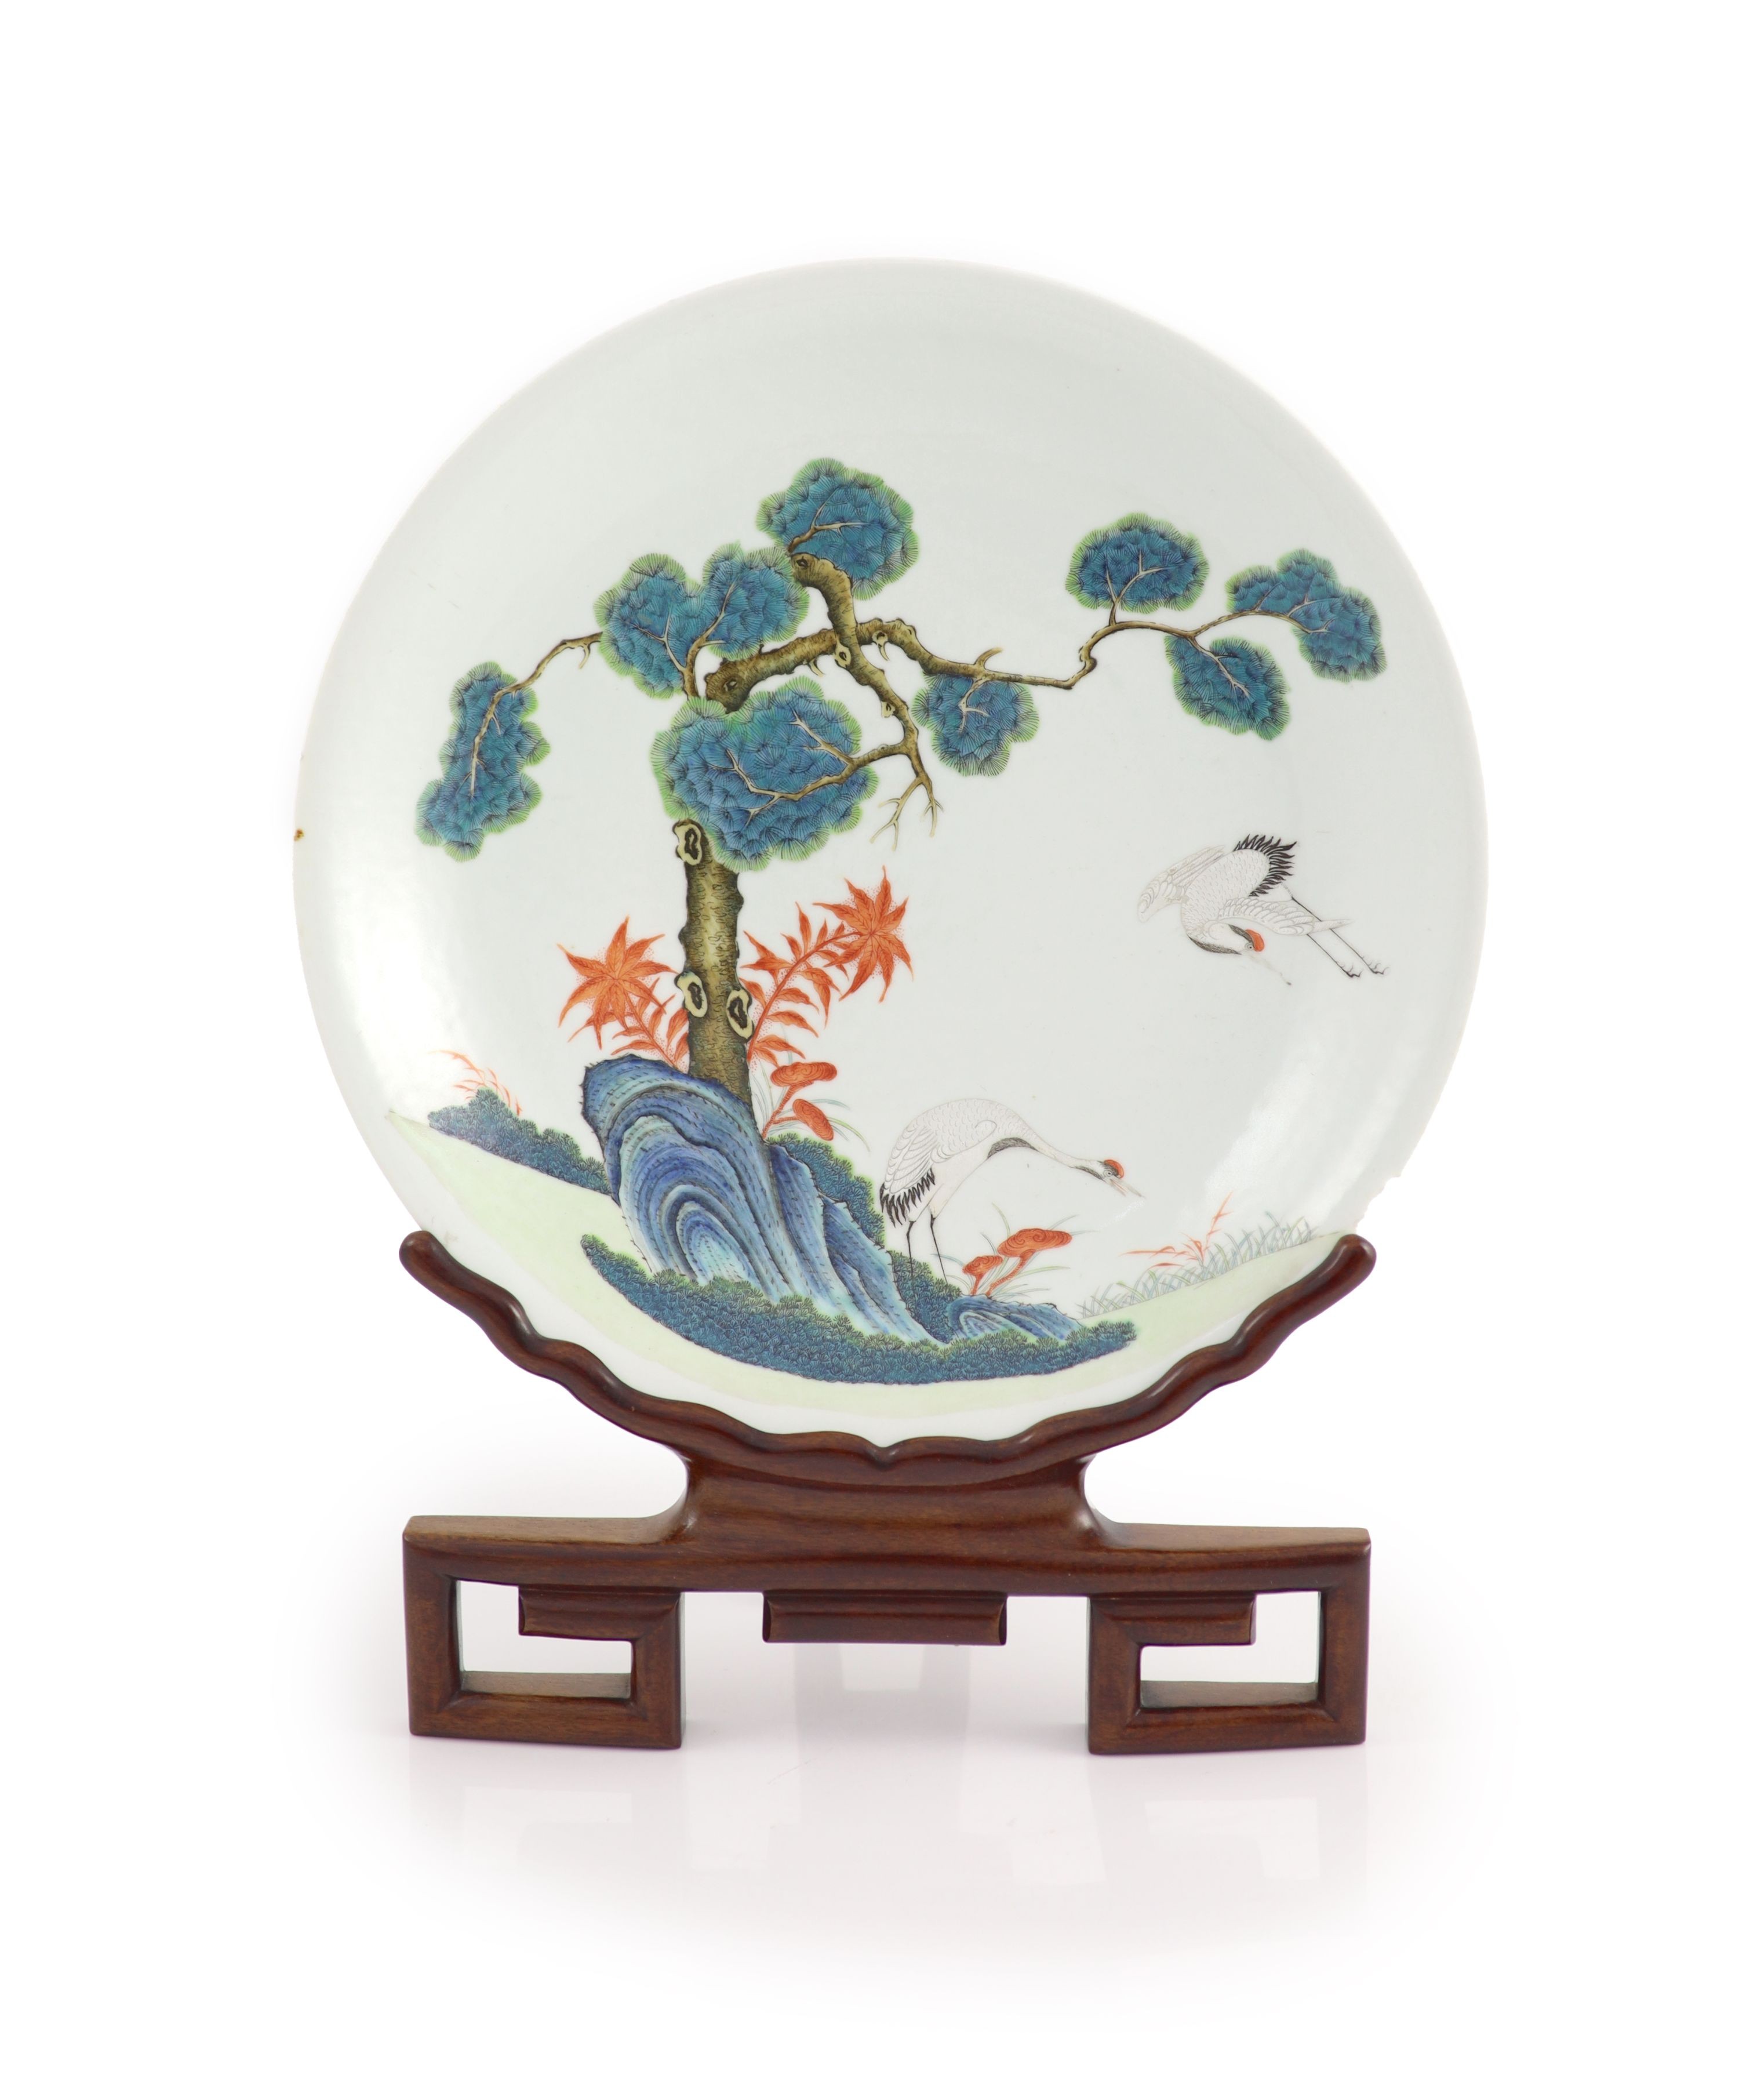 A Chinese Republic period enamelled porcelain 'crane' dish, four-character Jing Yuan Tang Zhi mark, 34.3cm diameter, rim chip